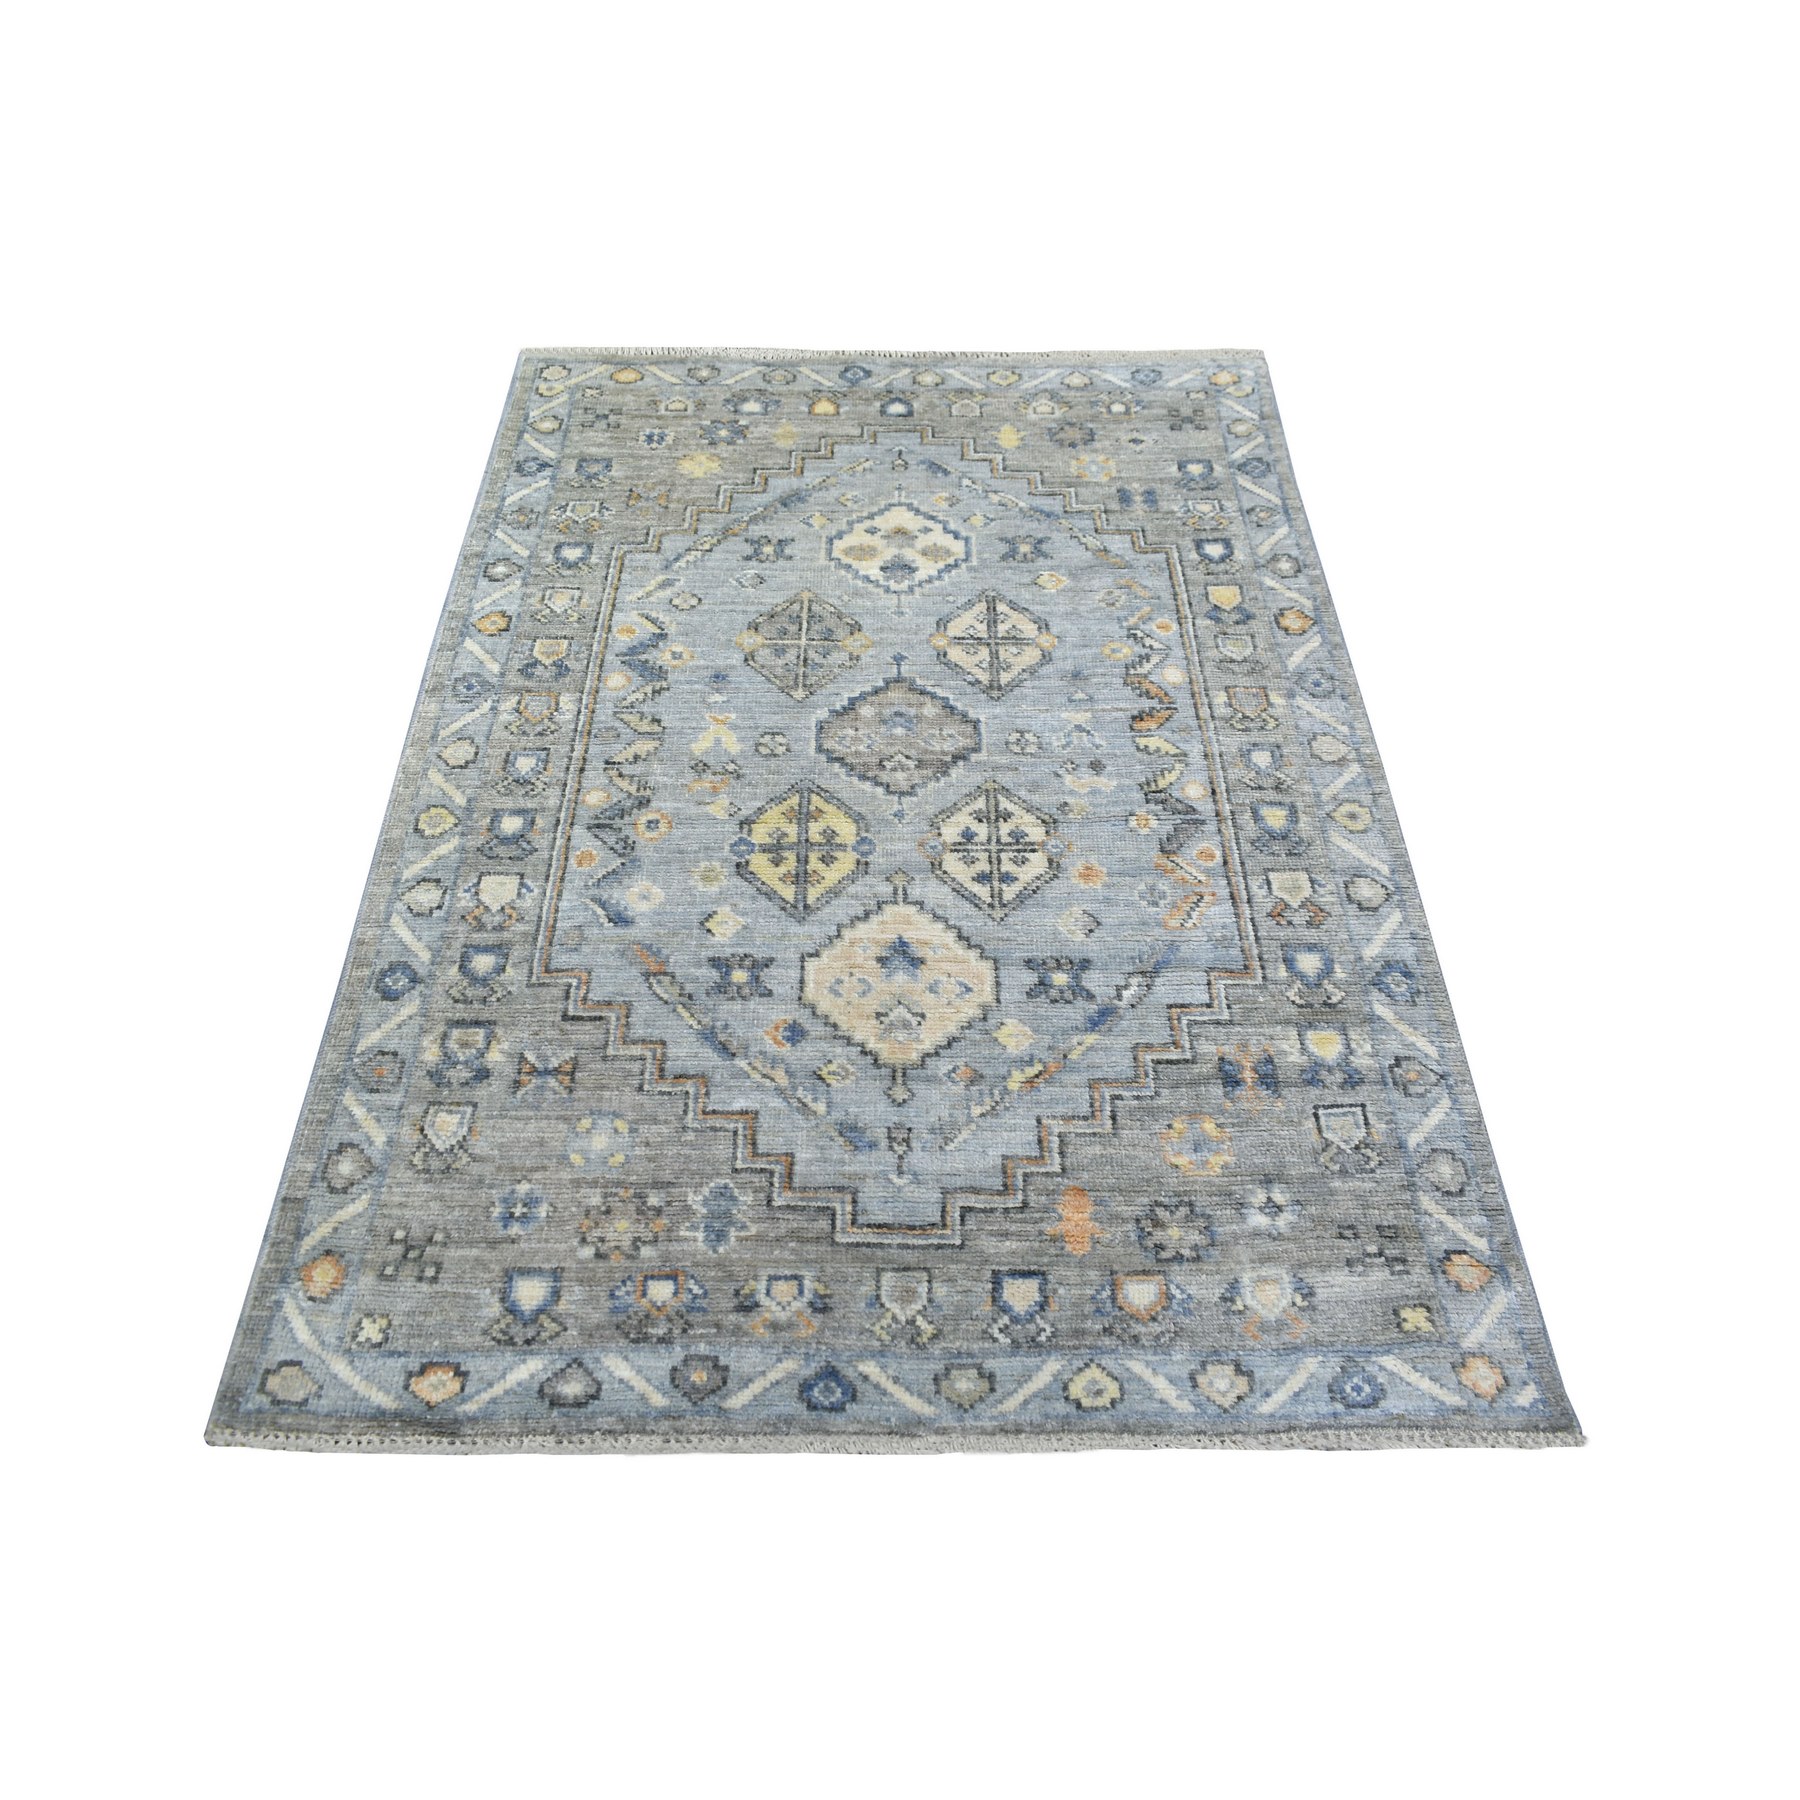 4'4"x6' Gray, Hand Woven, Anatolian Village Inspired Oushak, Organic Wool, Oriental Rug 